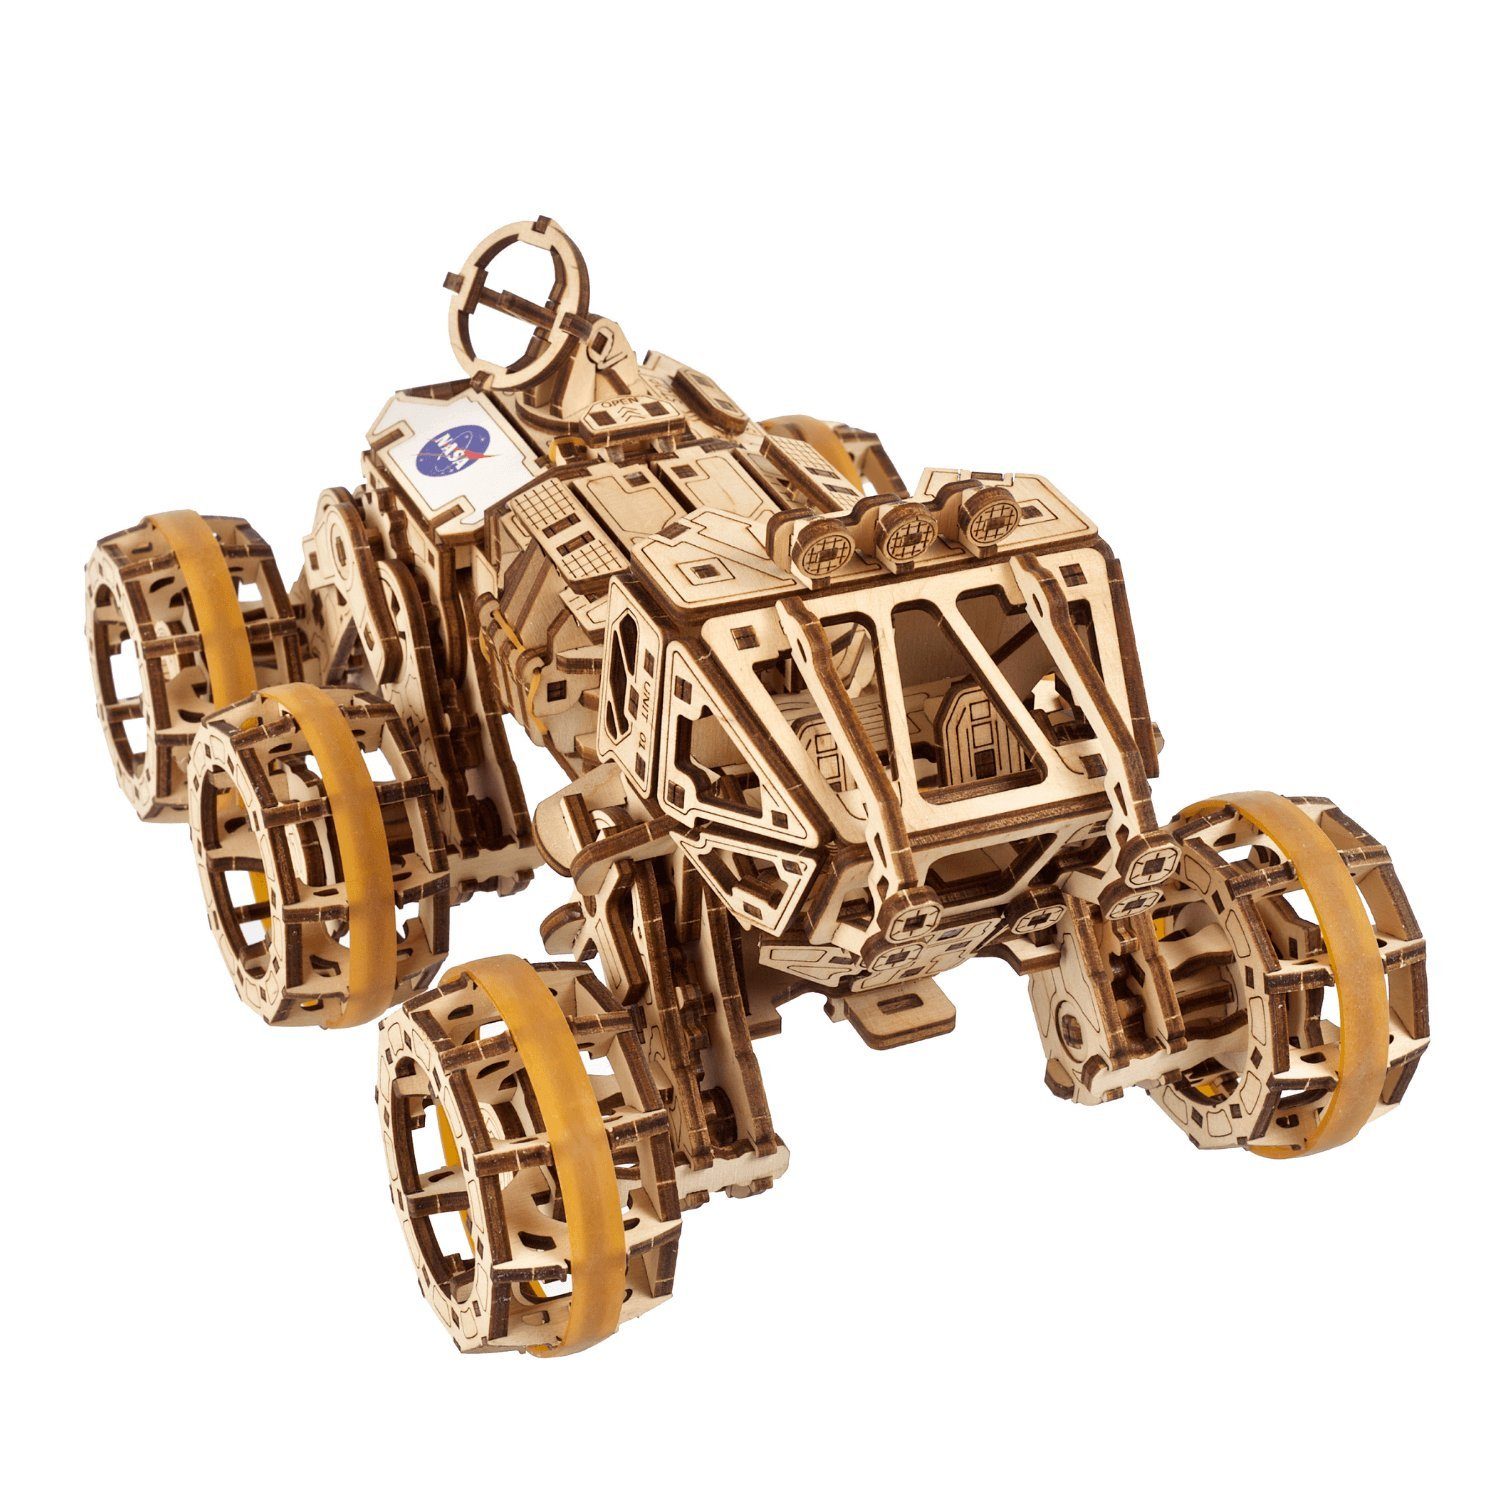 UGEARS Puzzle Ugears Bemannter Mars-Rover Mechanisches Holzpuzzle, 562 Puzzleteile